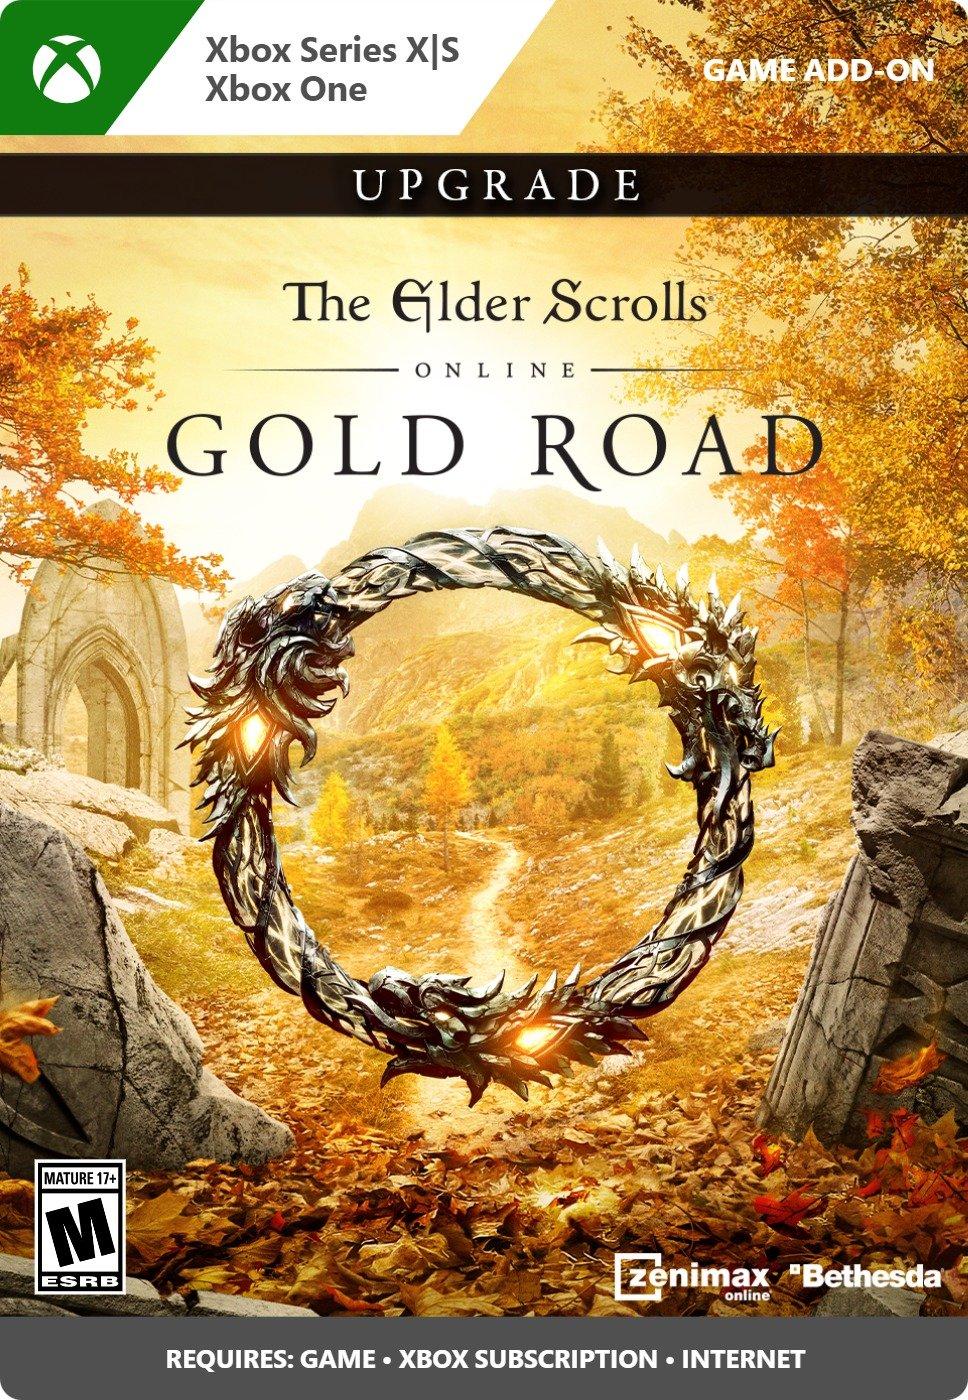 The Elder Scrolls Online Gold Road DLC Upgrade